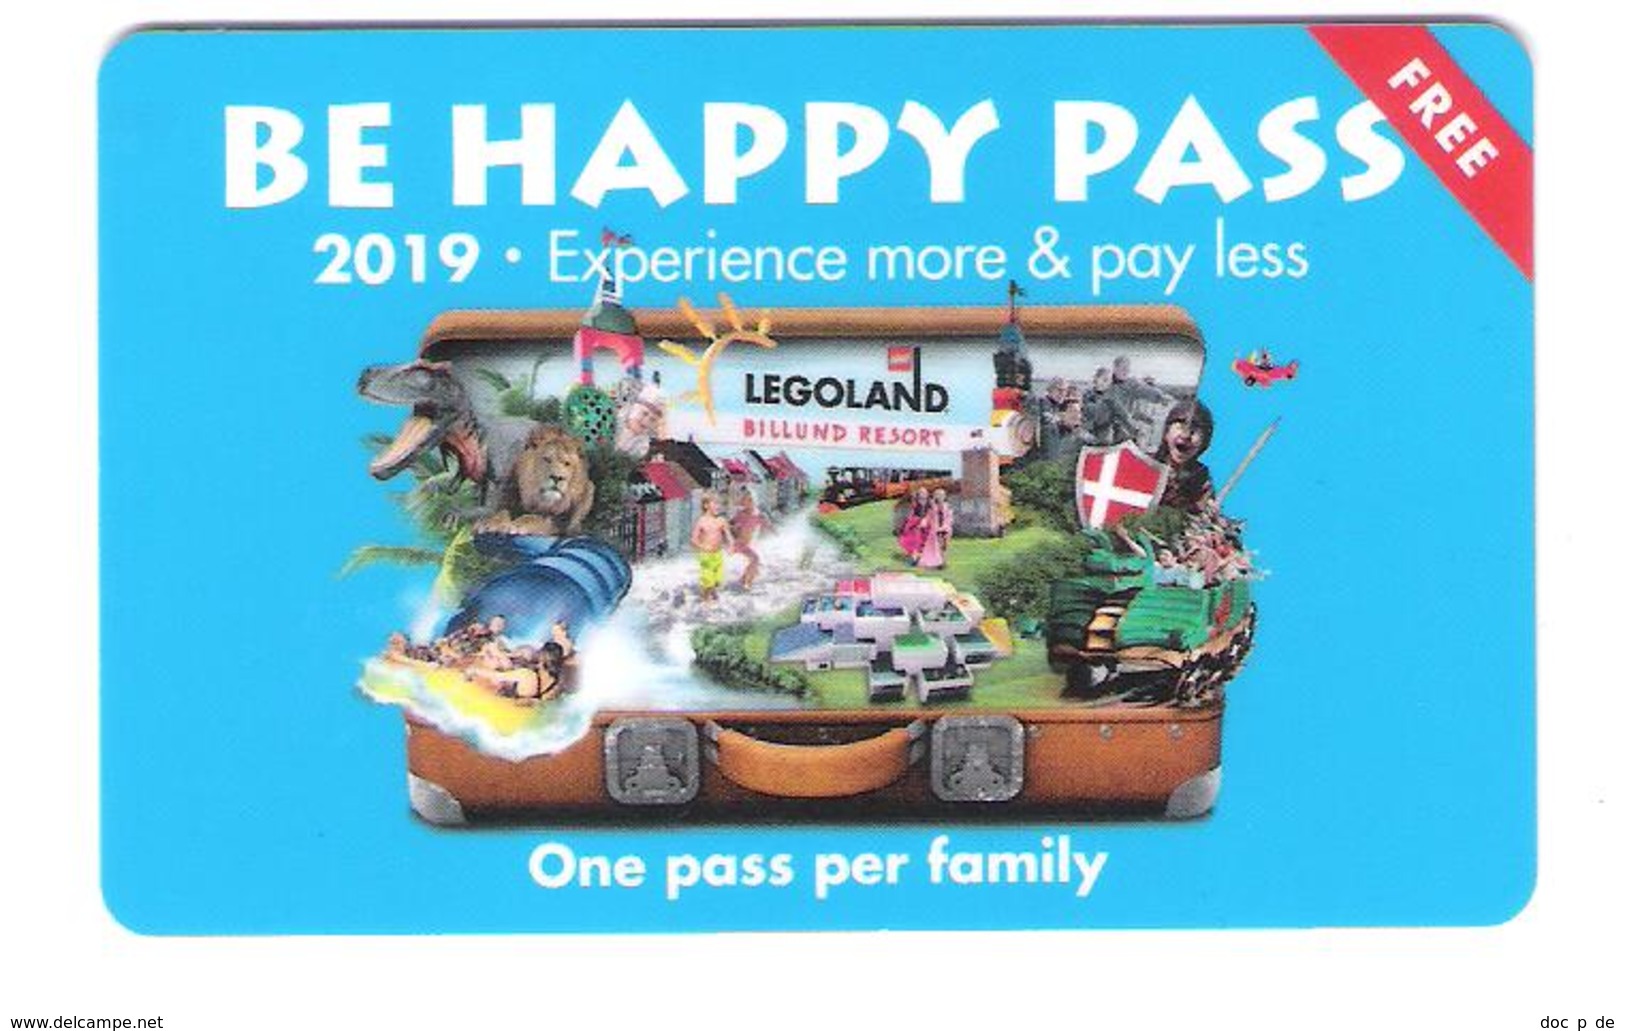 Lego - Legoland Billund - Be Happy Pass - Discount Card - Gift Cards